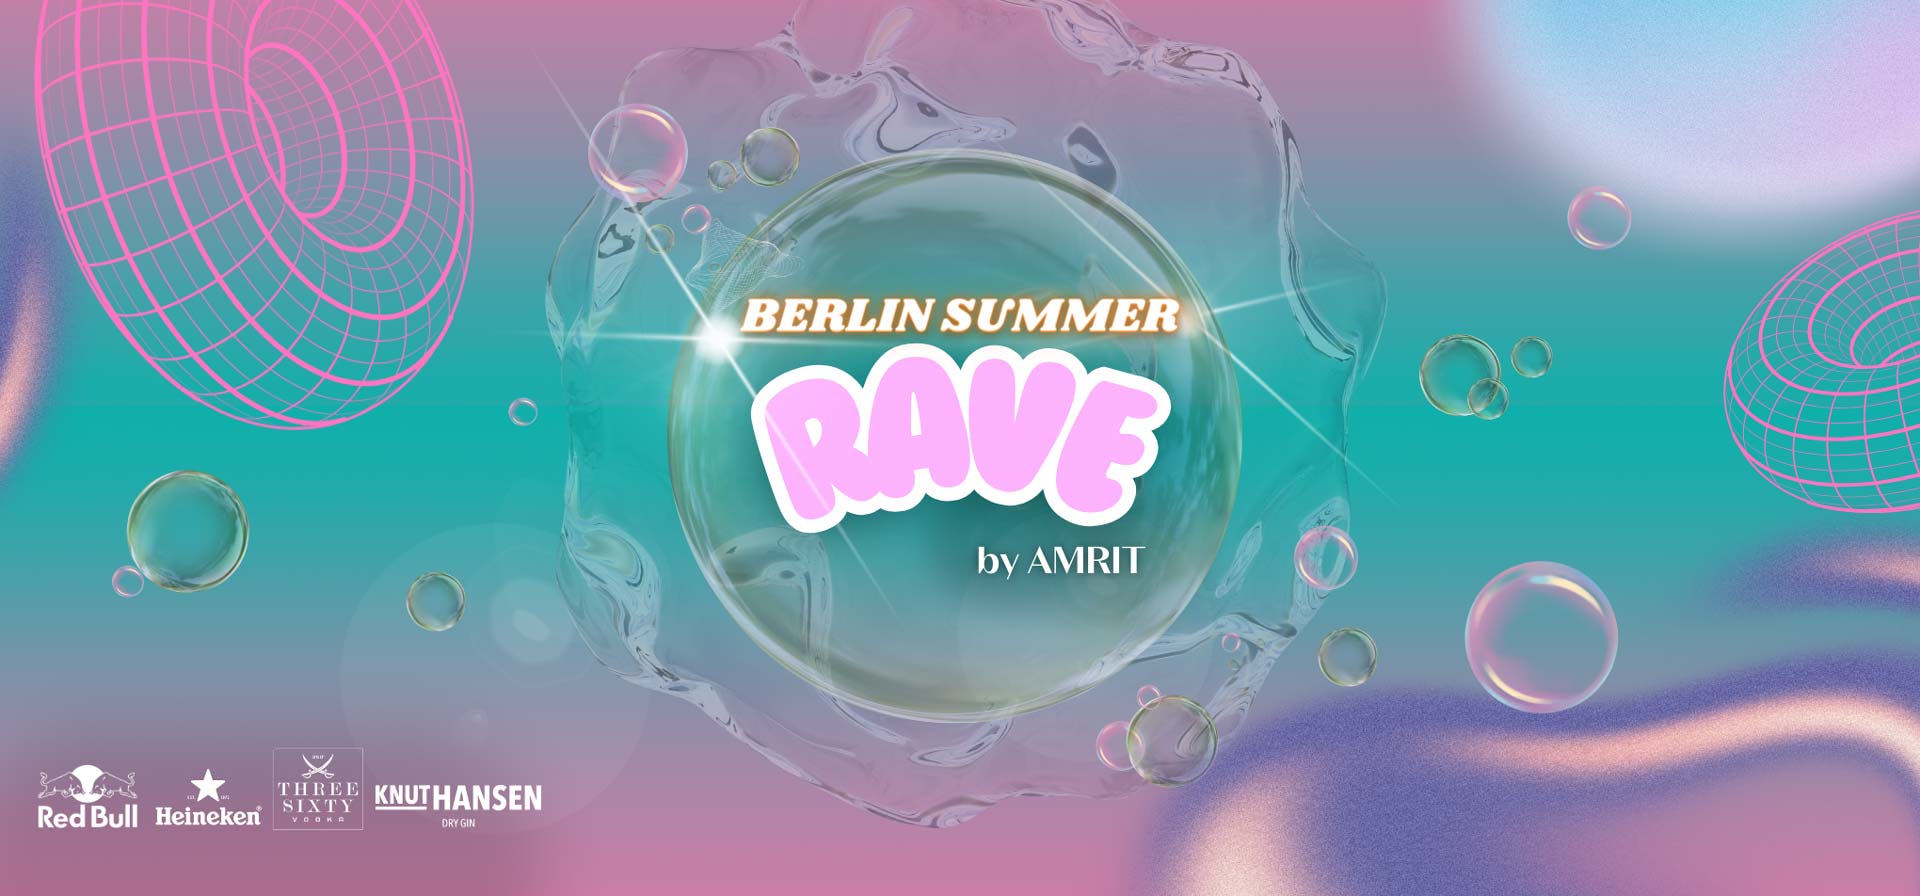 summer-rave-2